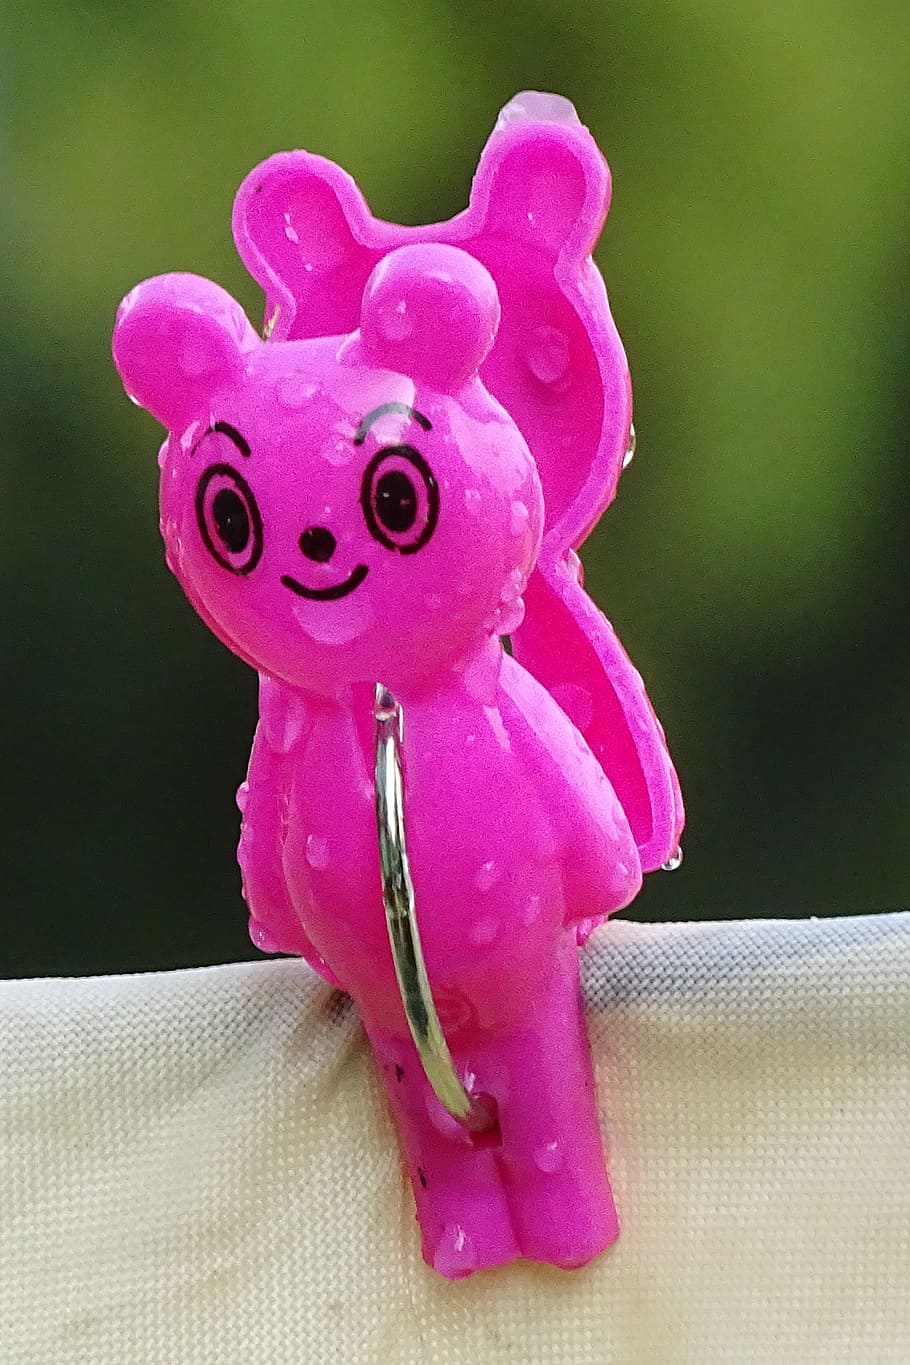 pinza de ropa, oso, clip, color rosado, representación animal, ninguna persona, representación, primer plano, juguete, animal